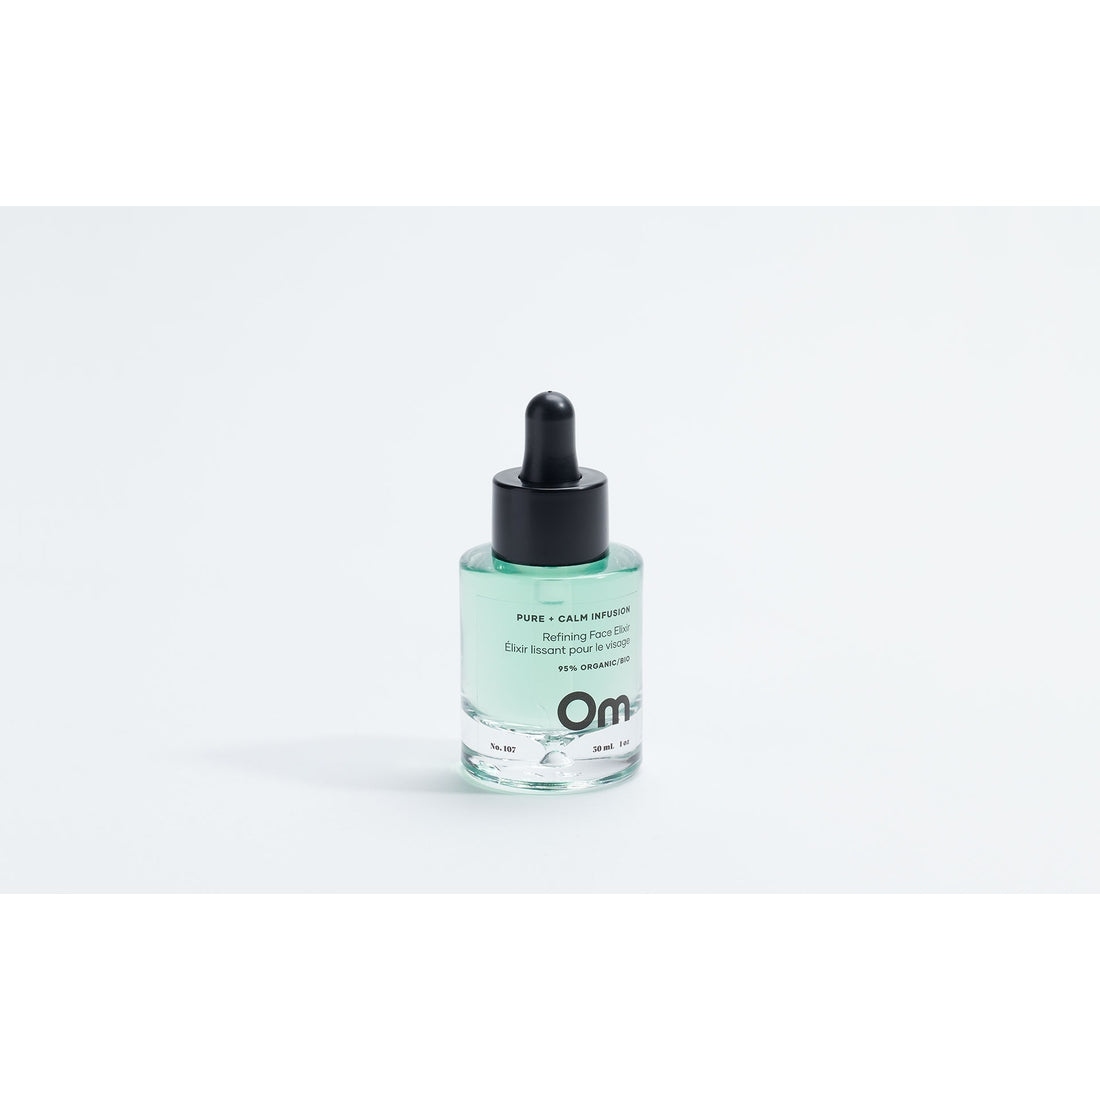 Pure + Calm Infusion Refining Face Elixir- OM Organics Skincare- Full size &amp; Mini